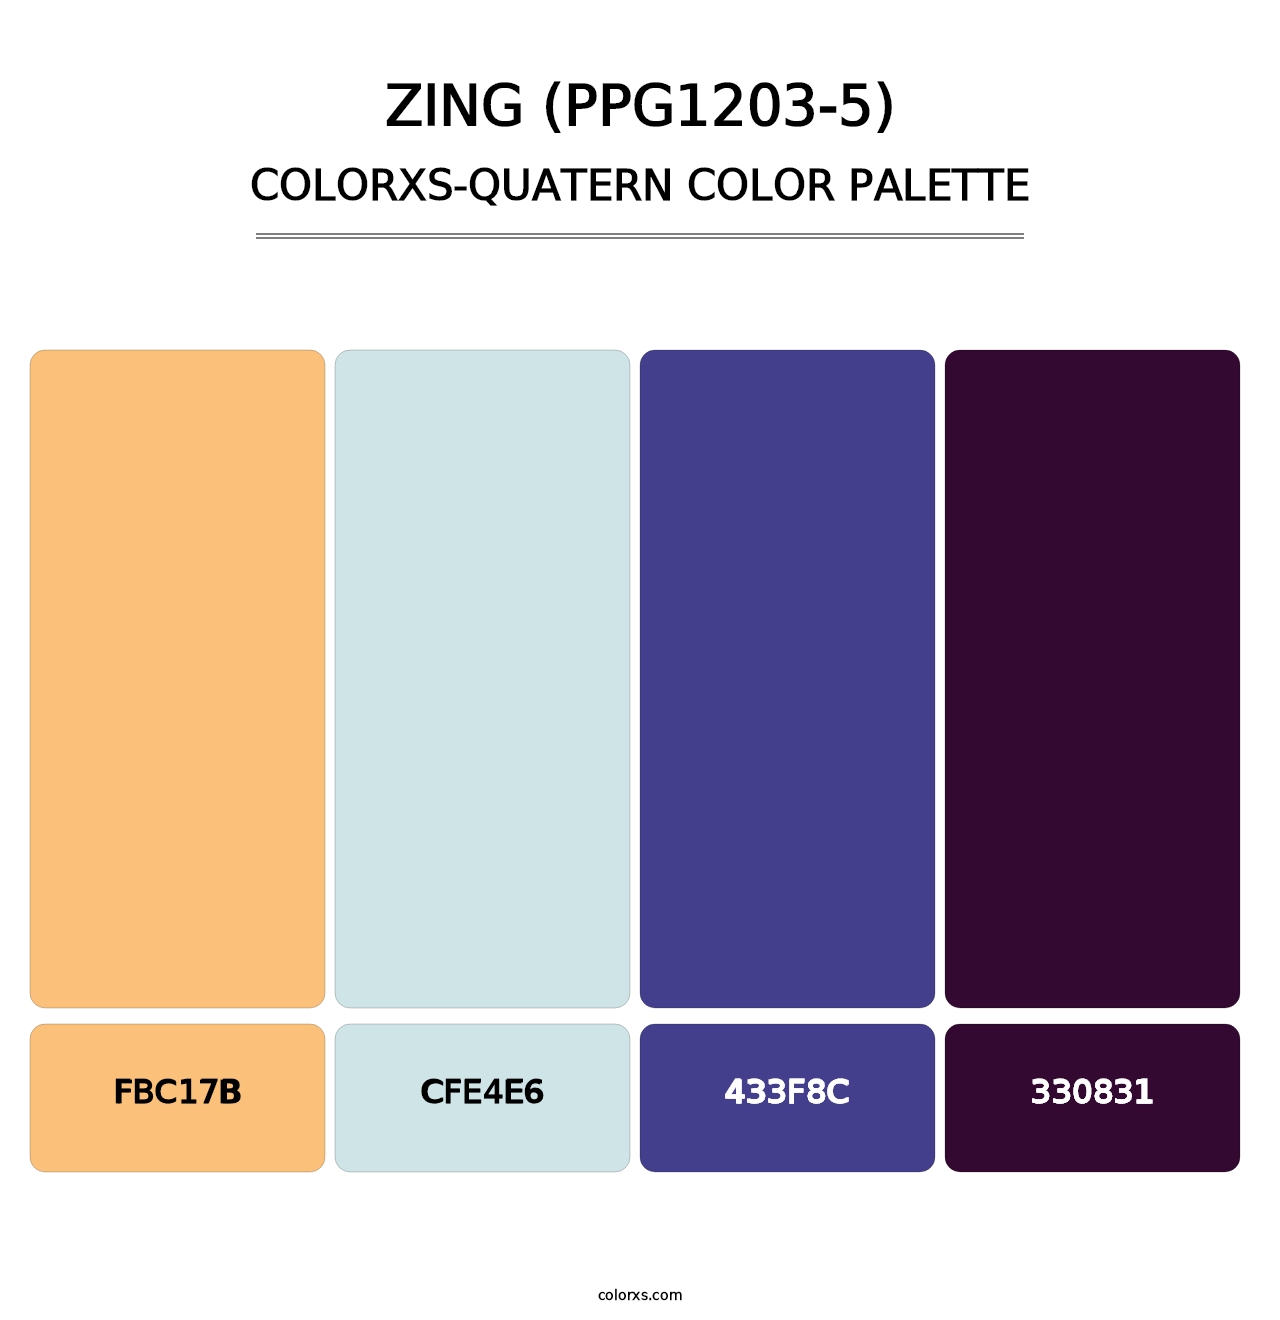 Zing (PPG1203-5) - Colorxs Quatern Palette